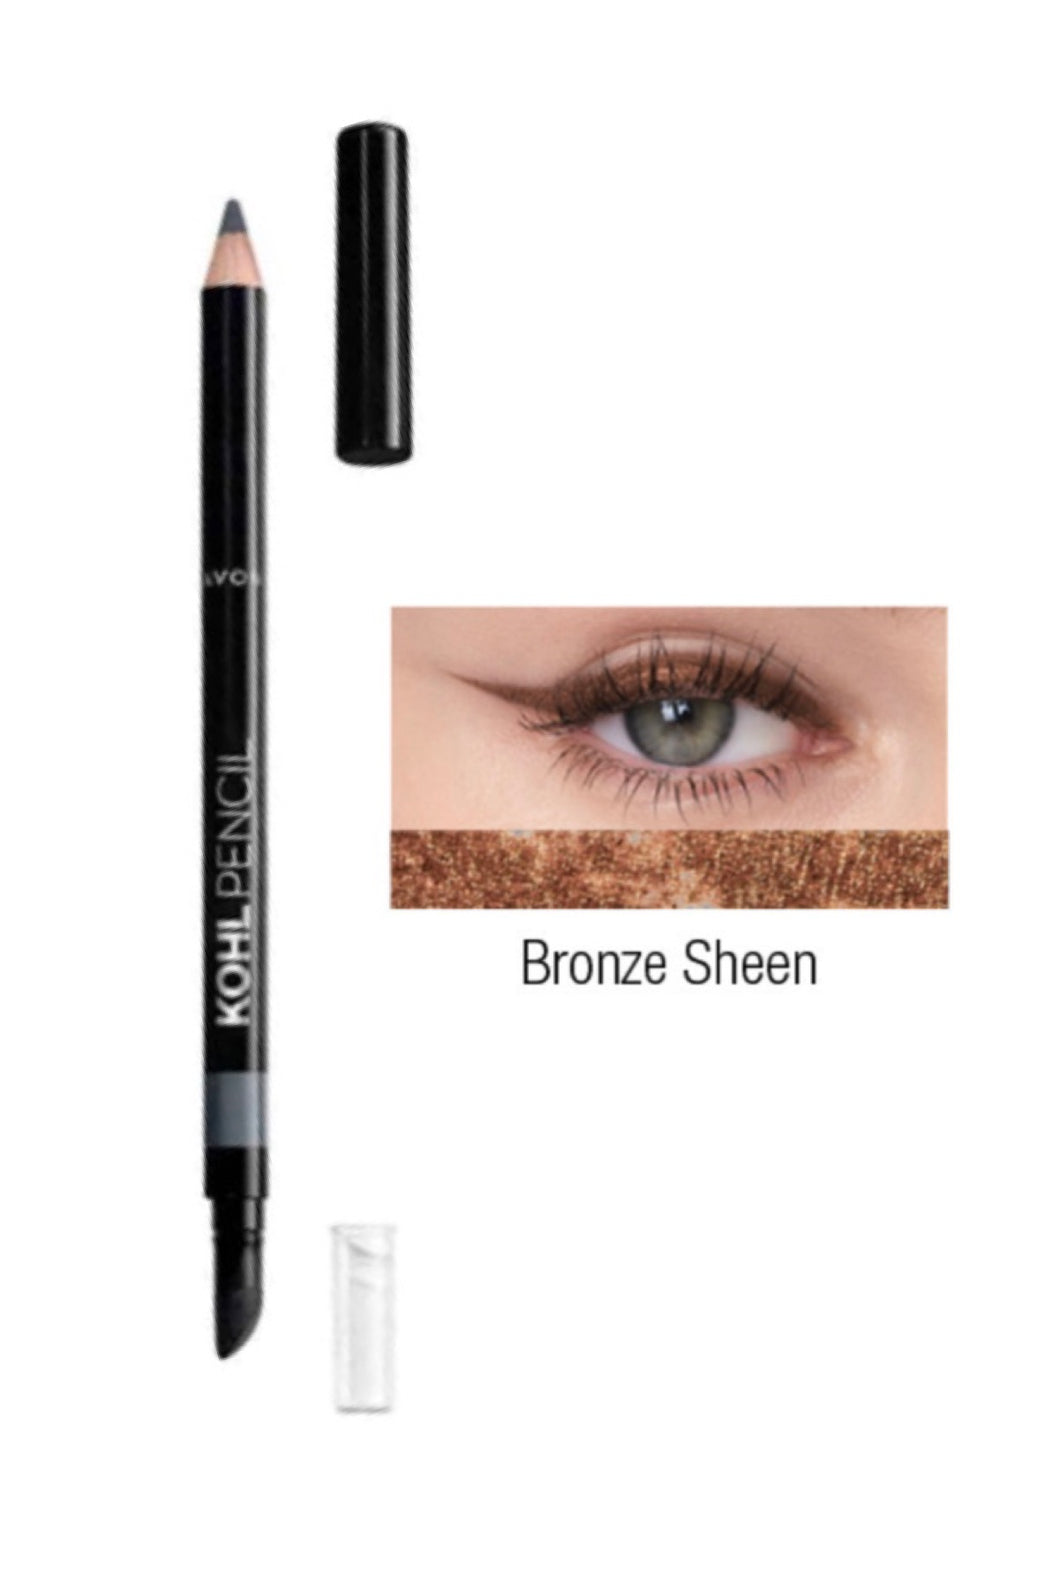 Bronze Sheen Kohl Eyeliner Pencil